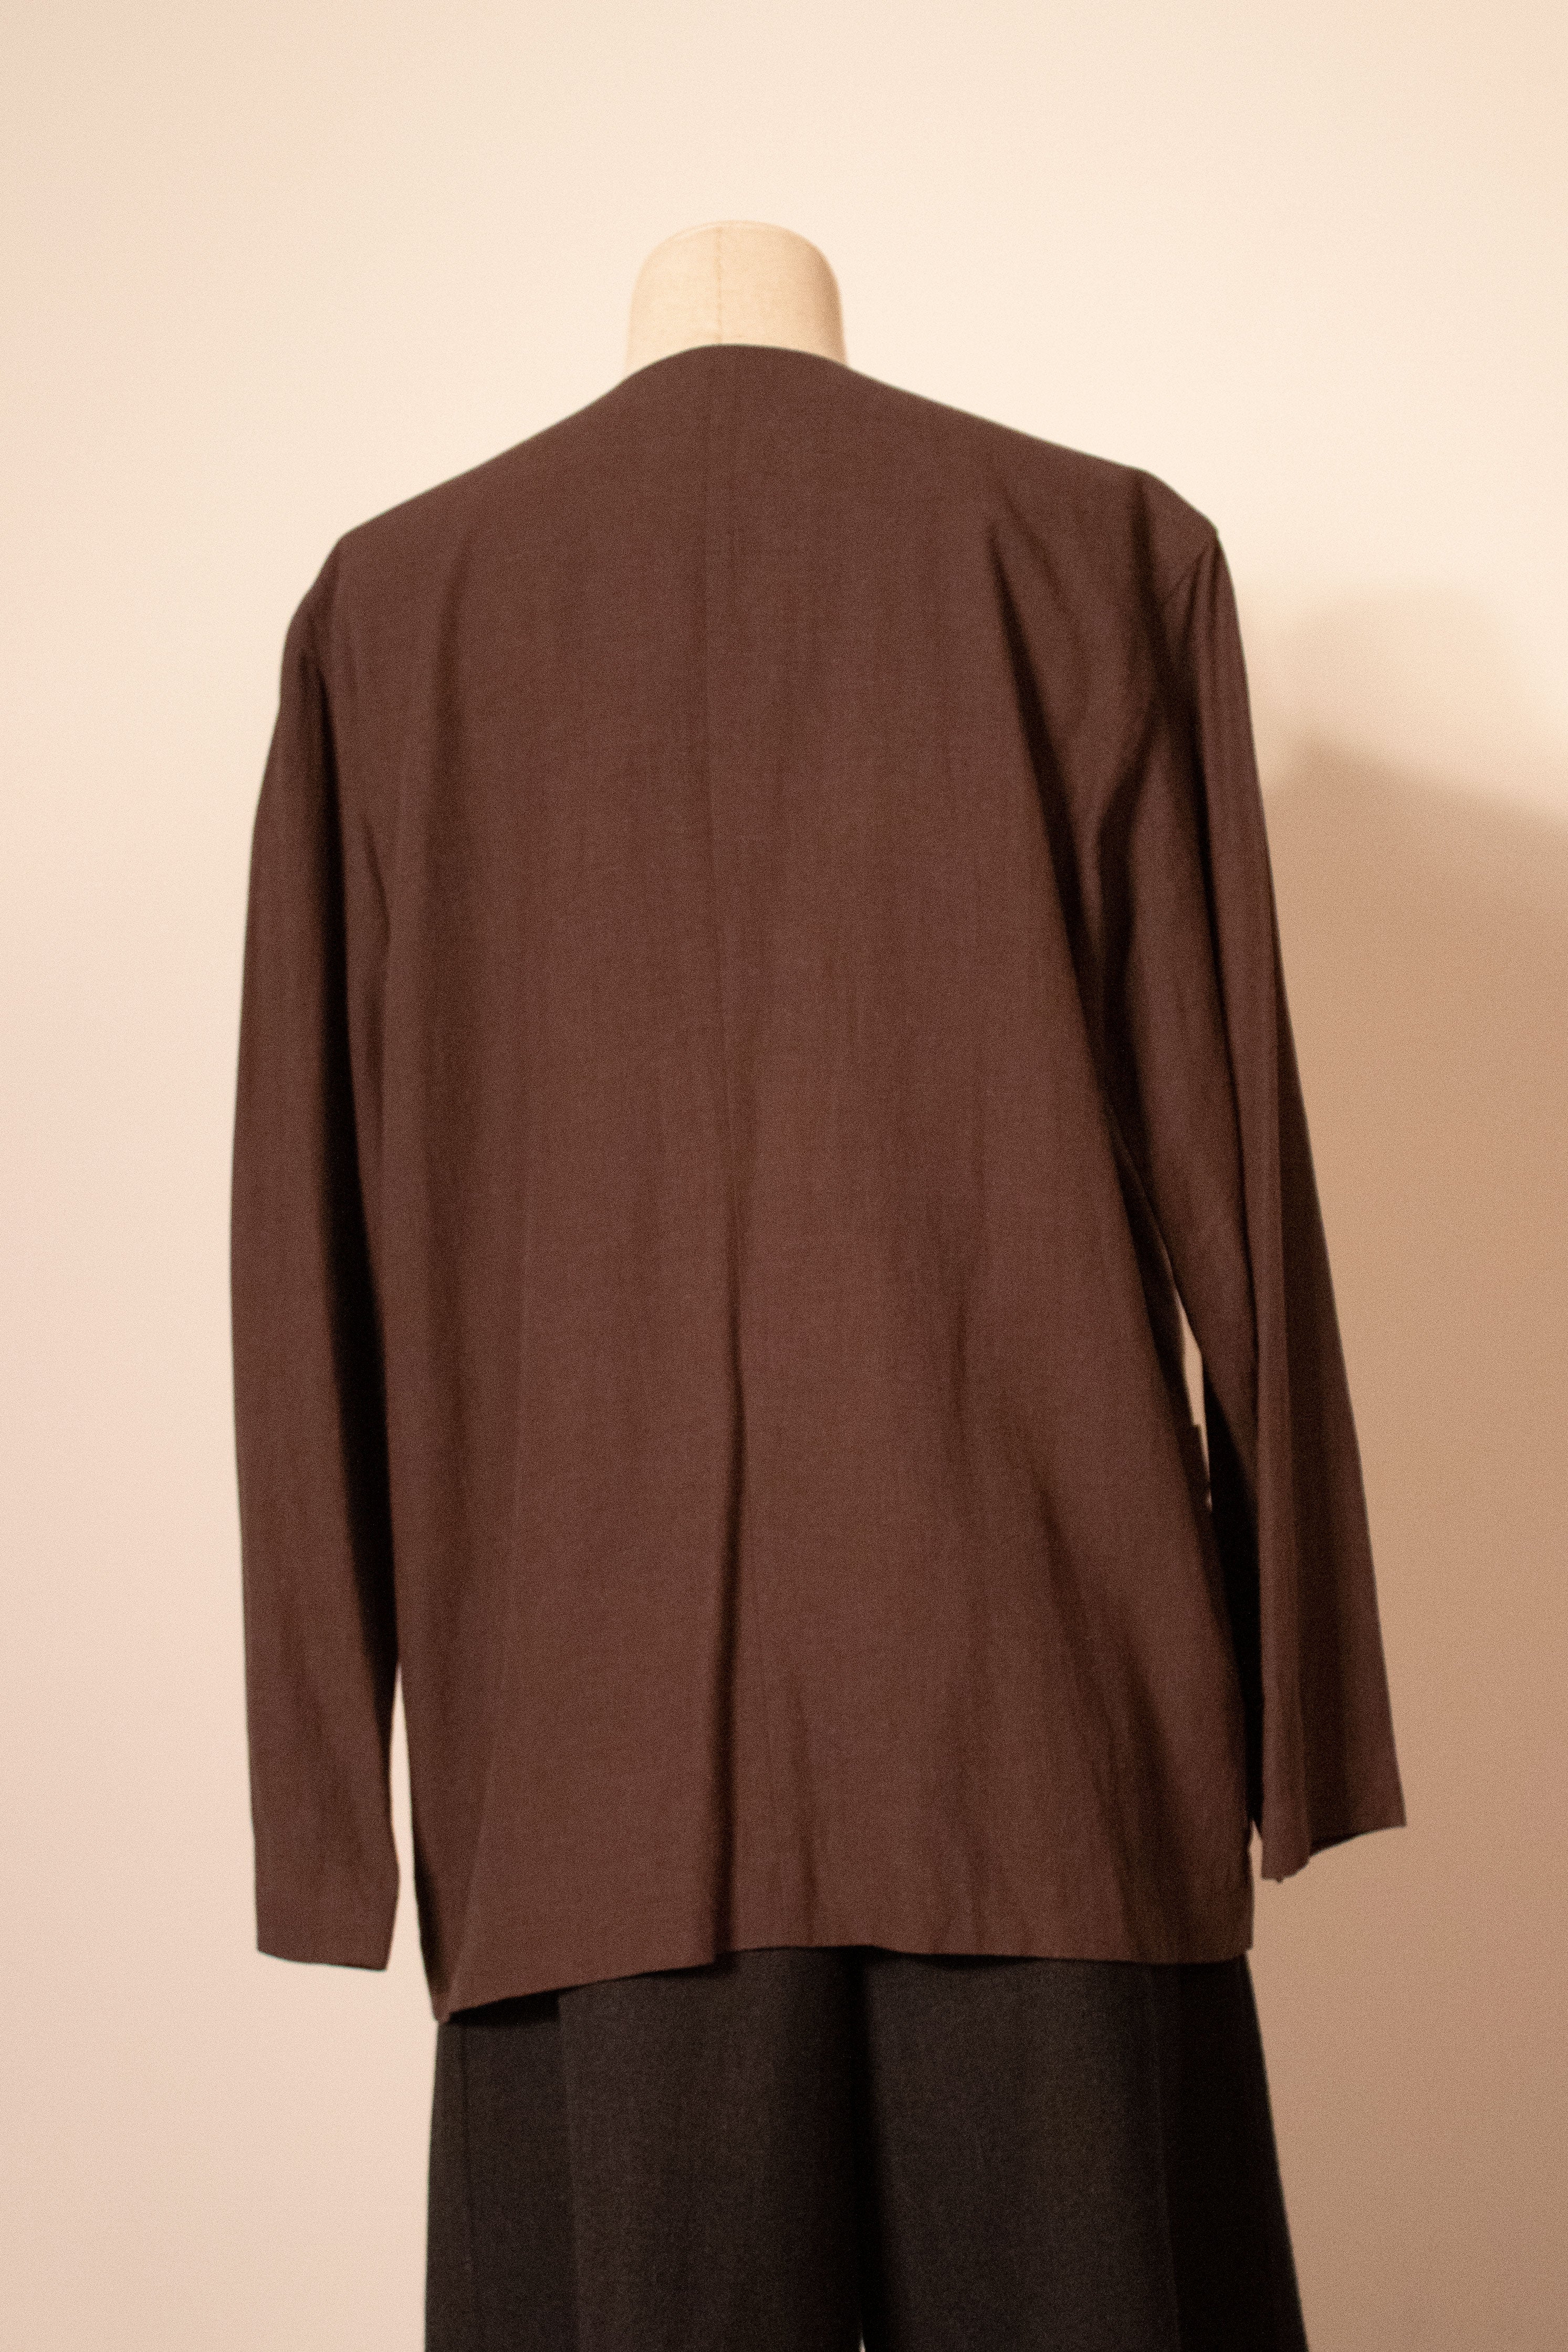 Miyake Plantation brown linen 2-pocket jacket